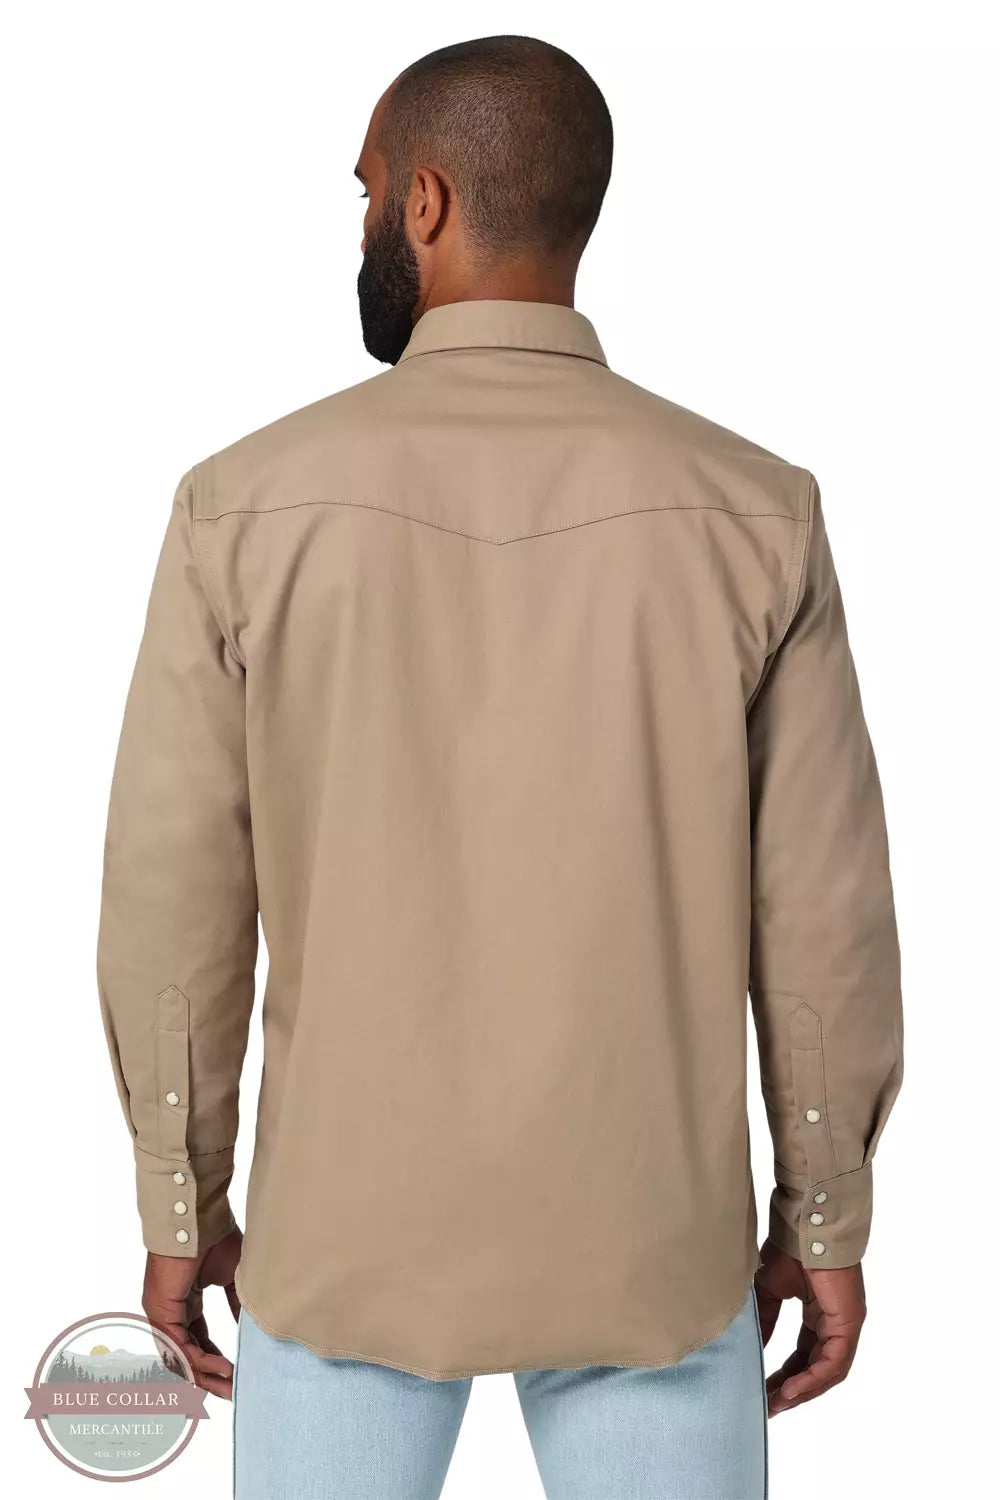 Wrangler 112330931 Flannel Lined Workshirt in Dune back View